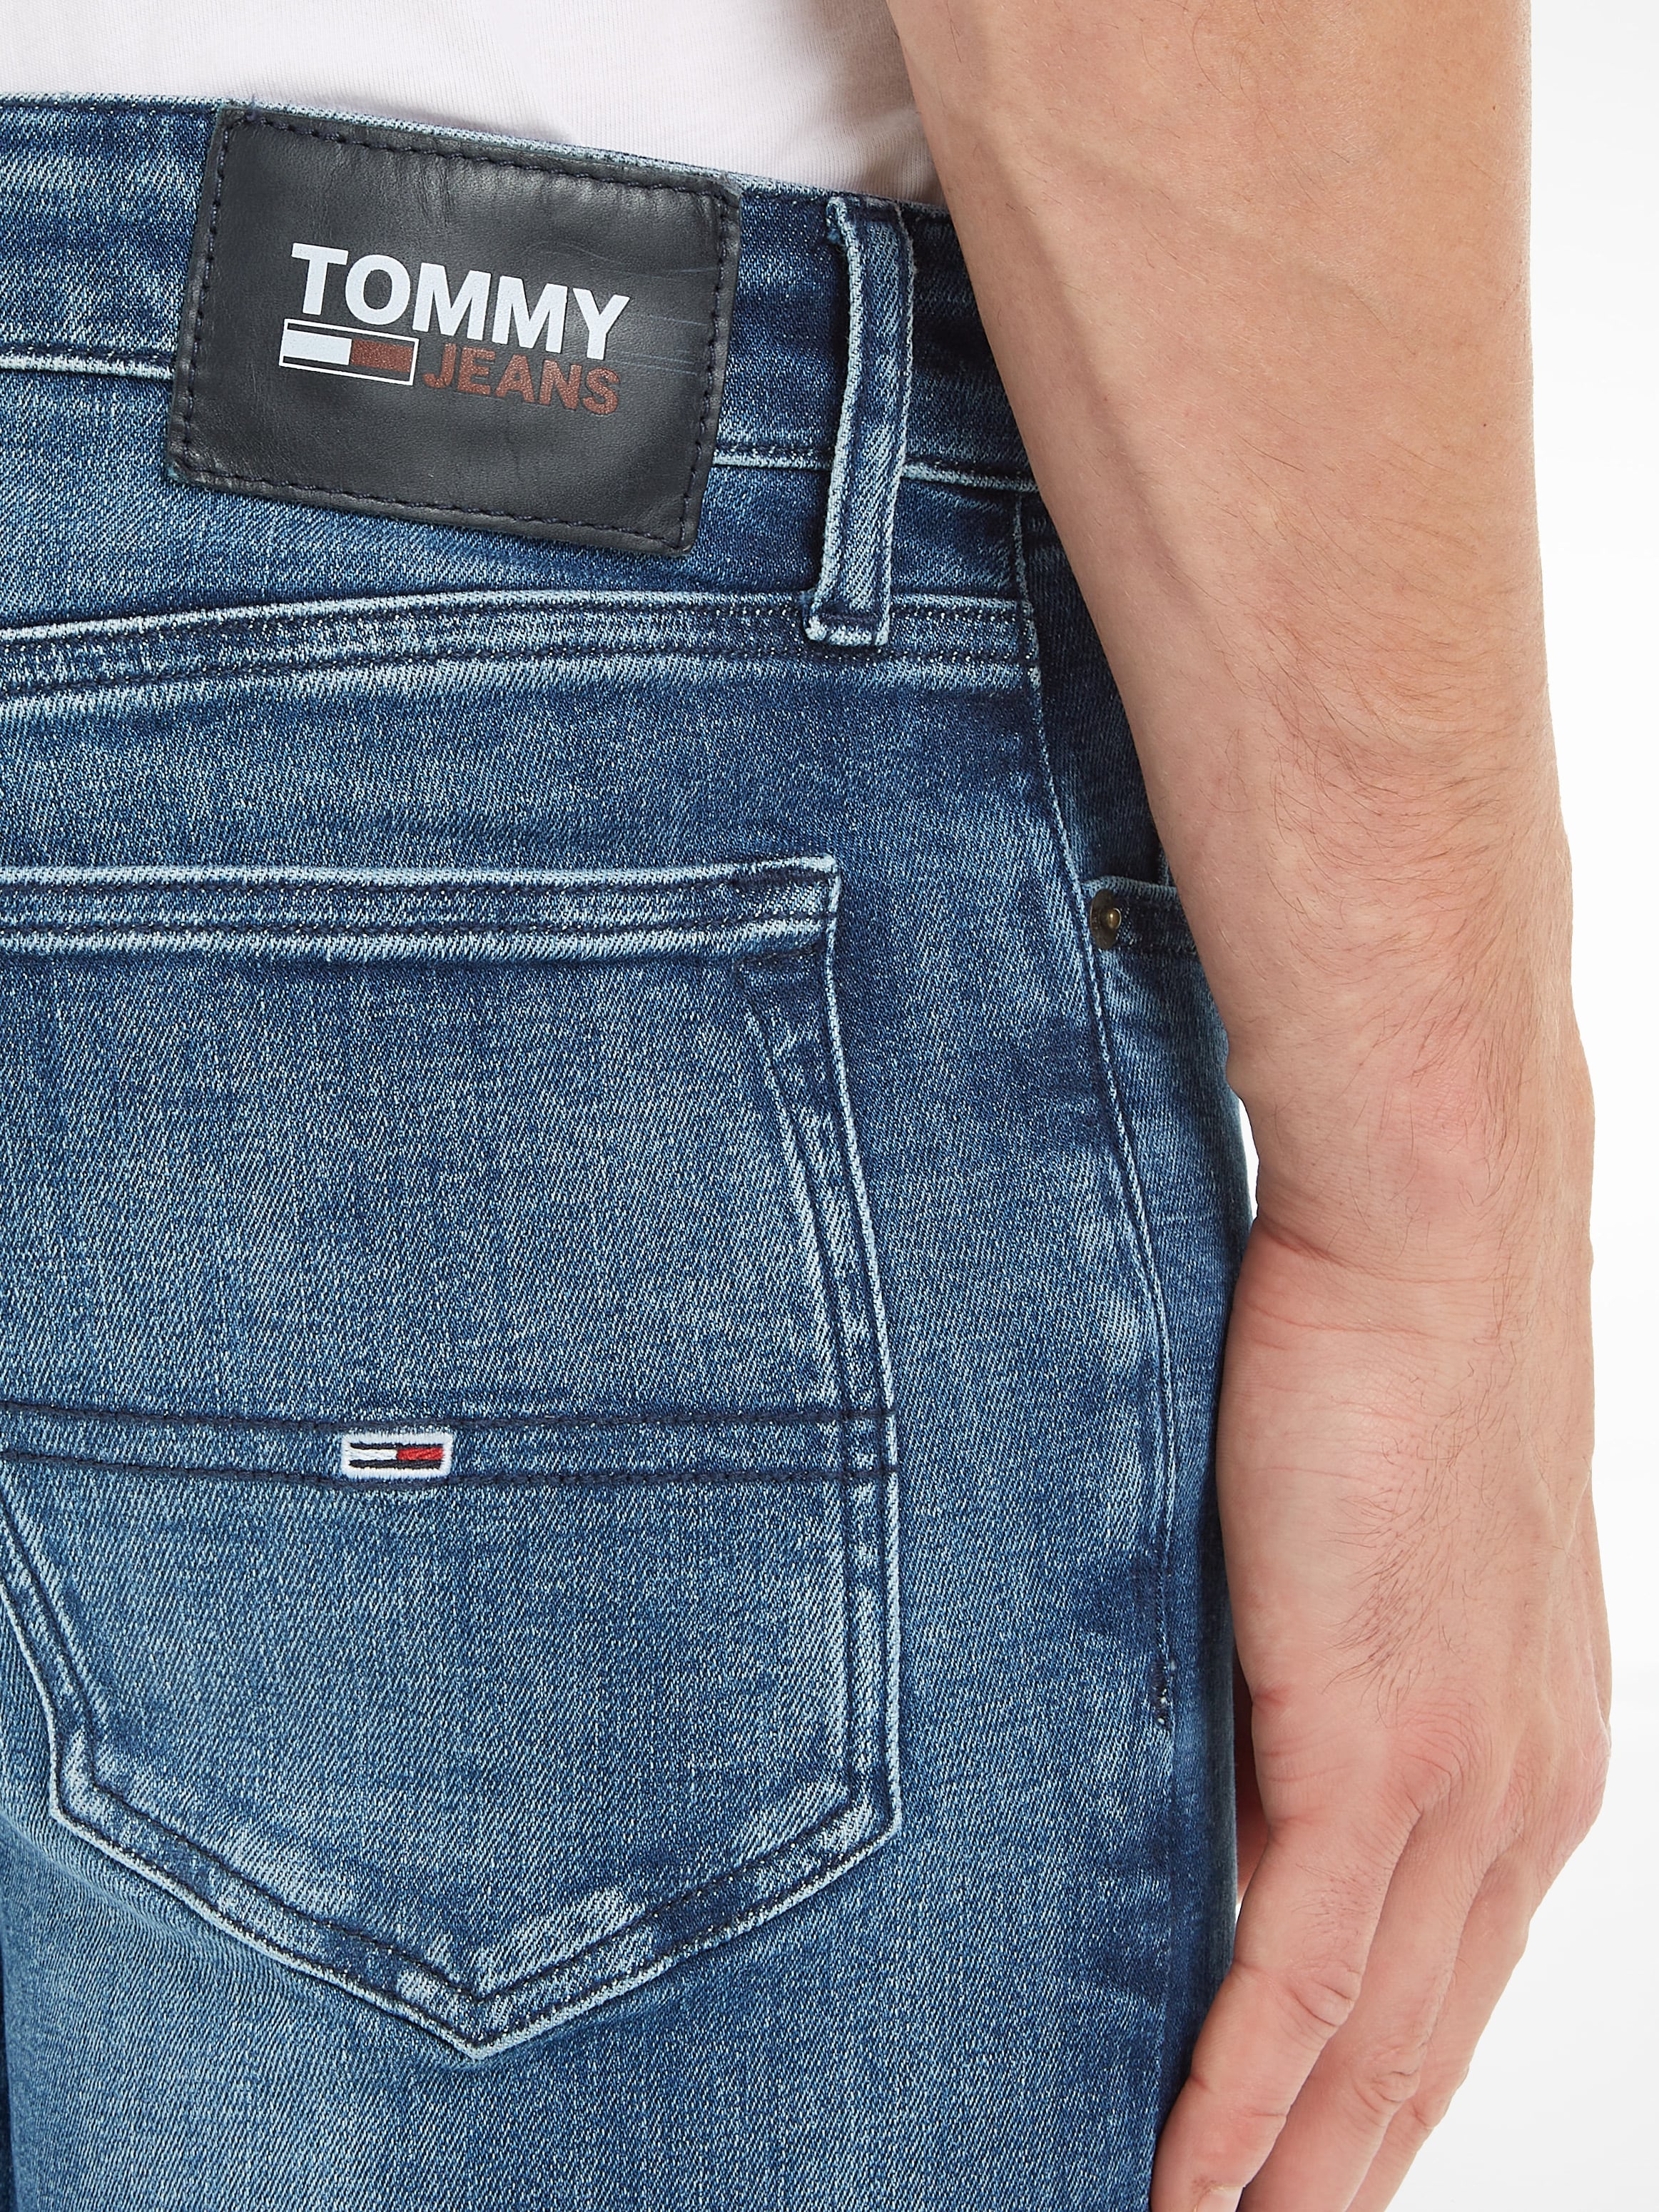 Tommy Jeans Skinny-fit-Jeans »SIMON in BG3384«, modischen OTTO bei SKNY Waschungen shoppen online